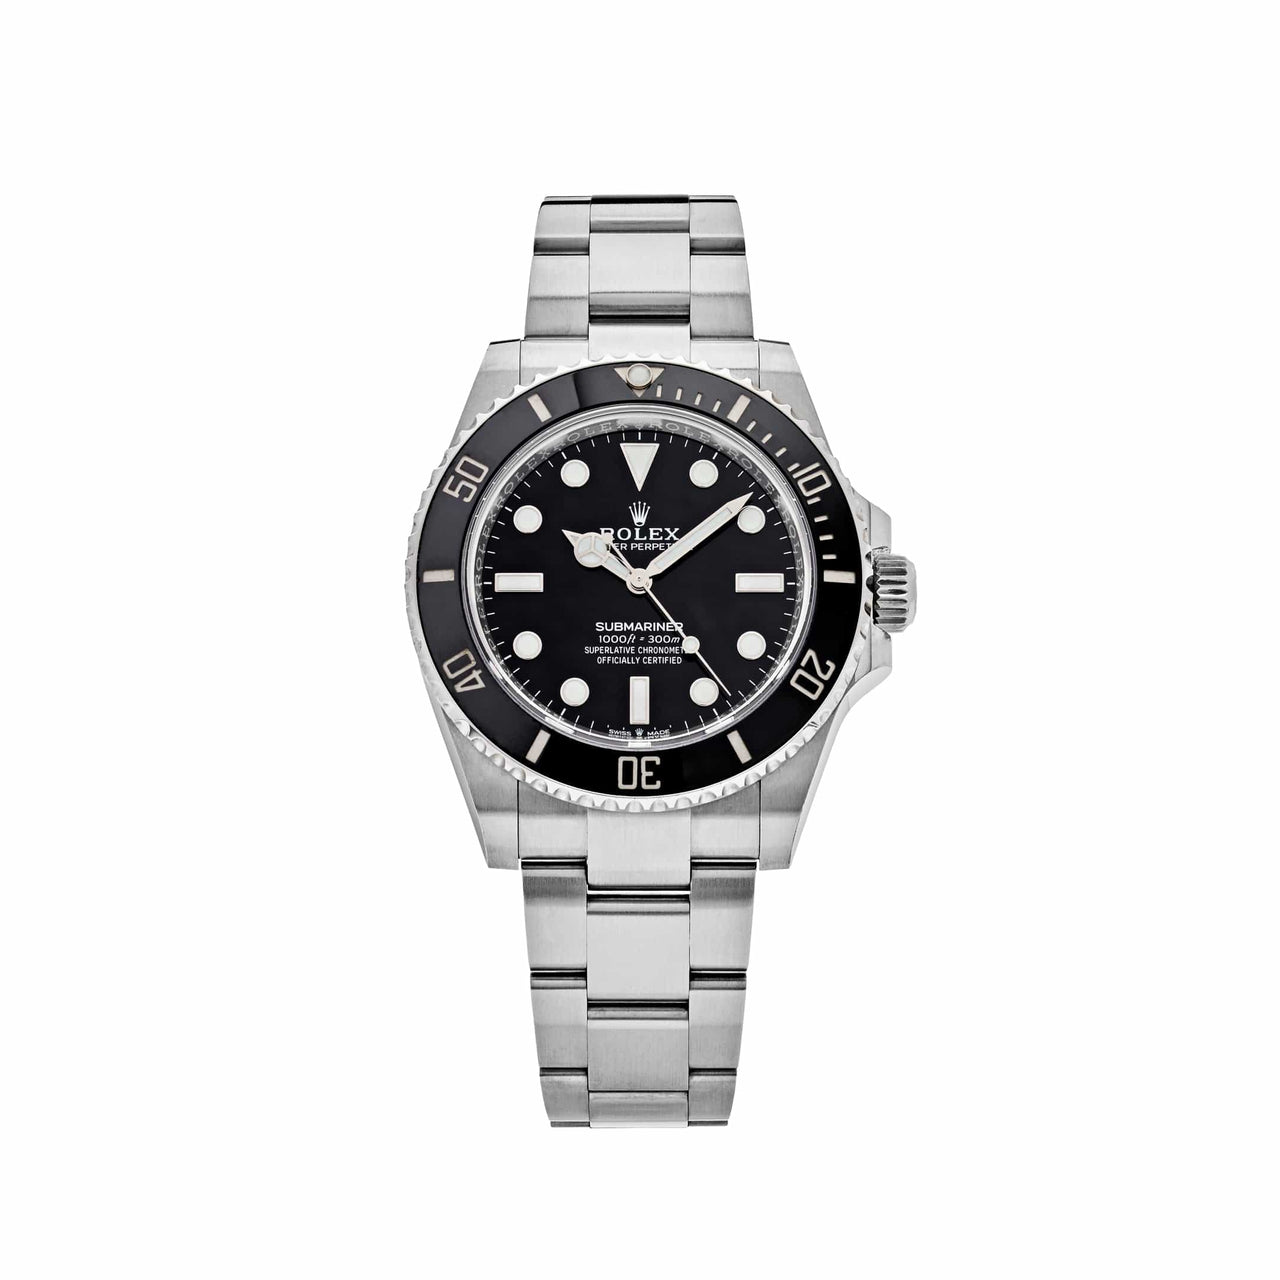 Rolex Submariner 41 Stainless Steel No Date Black Dial 124060 wrist aficionado